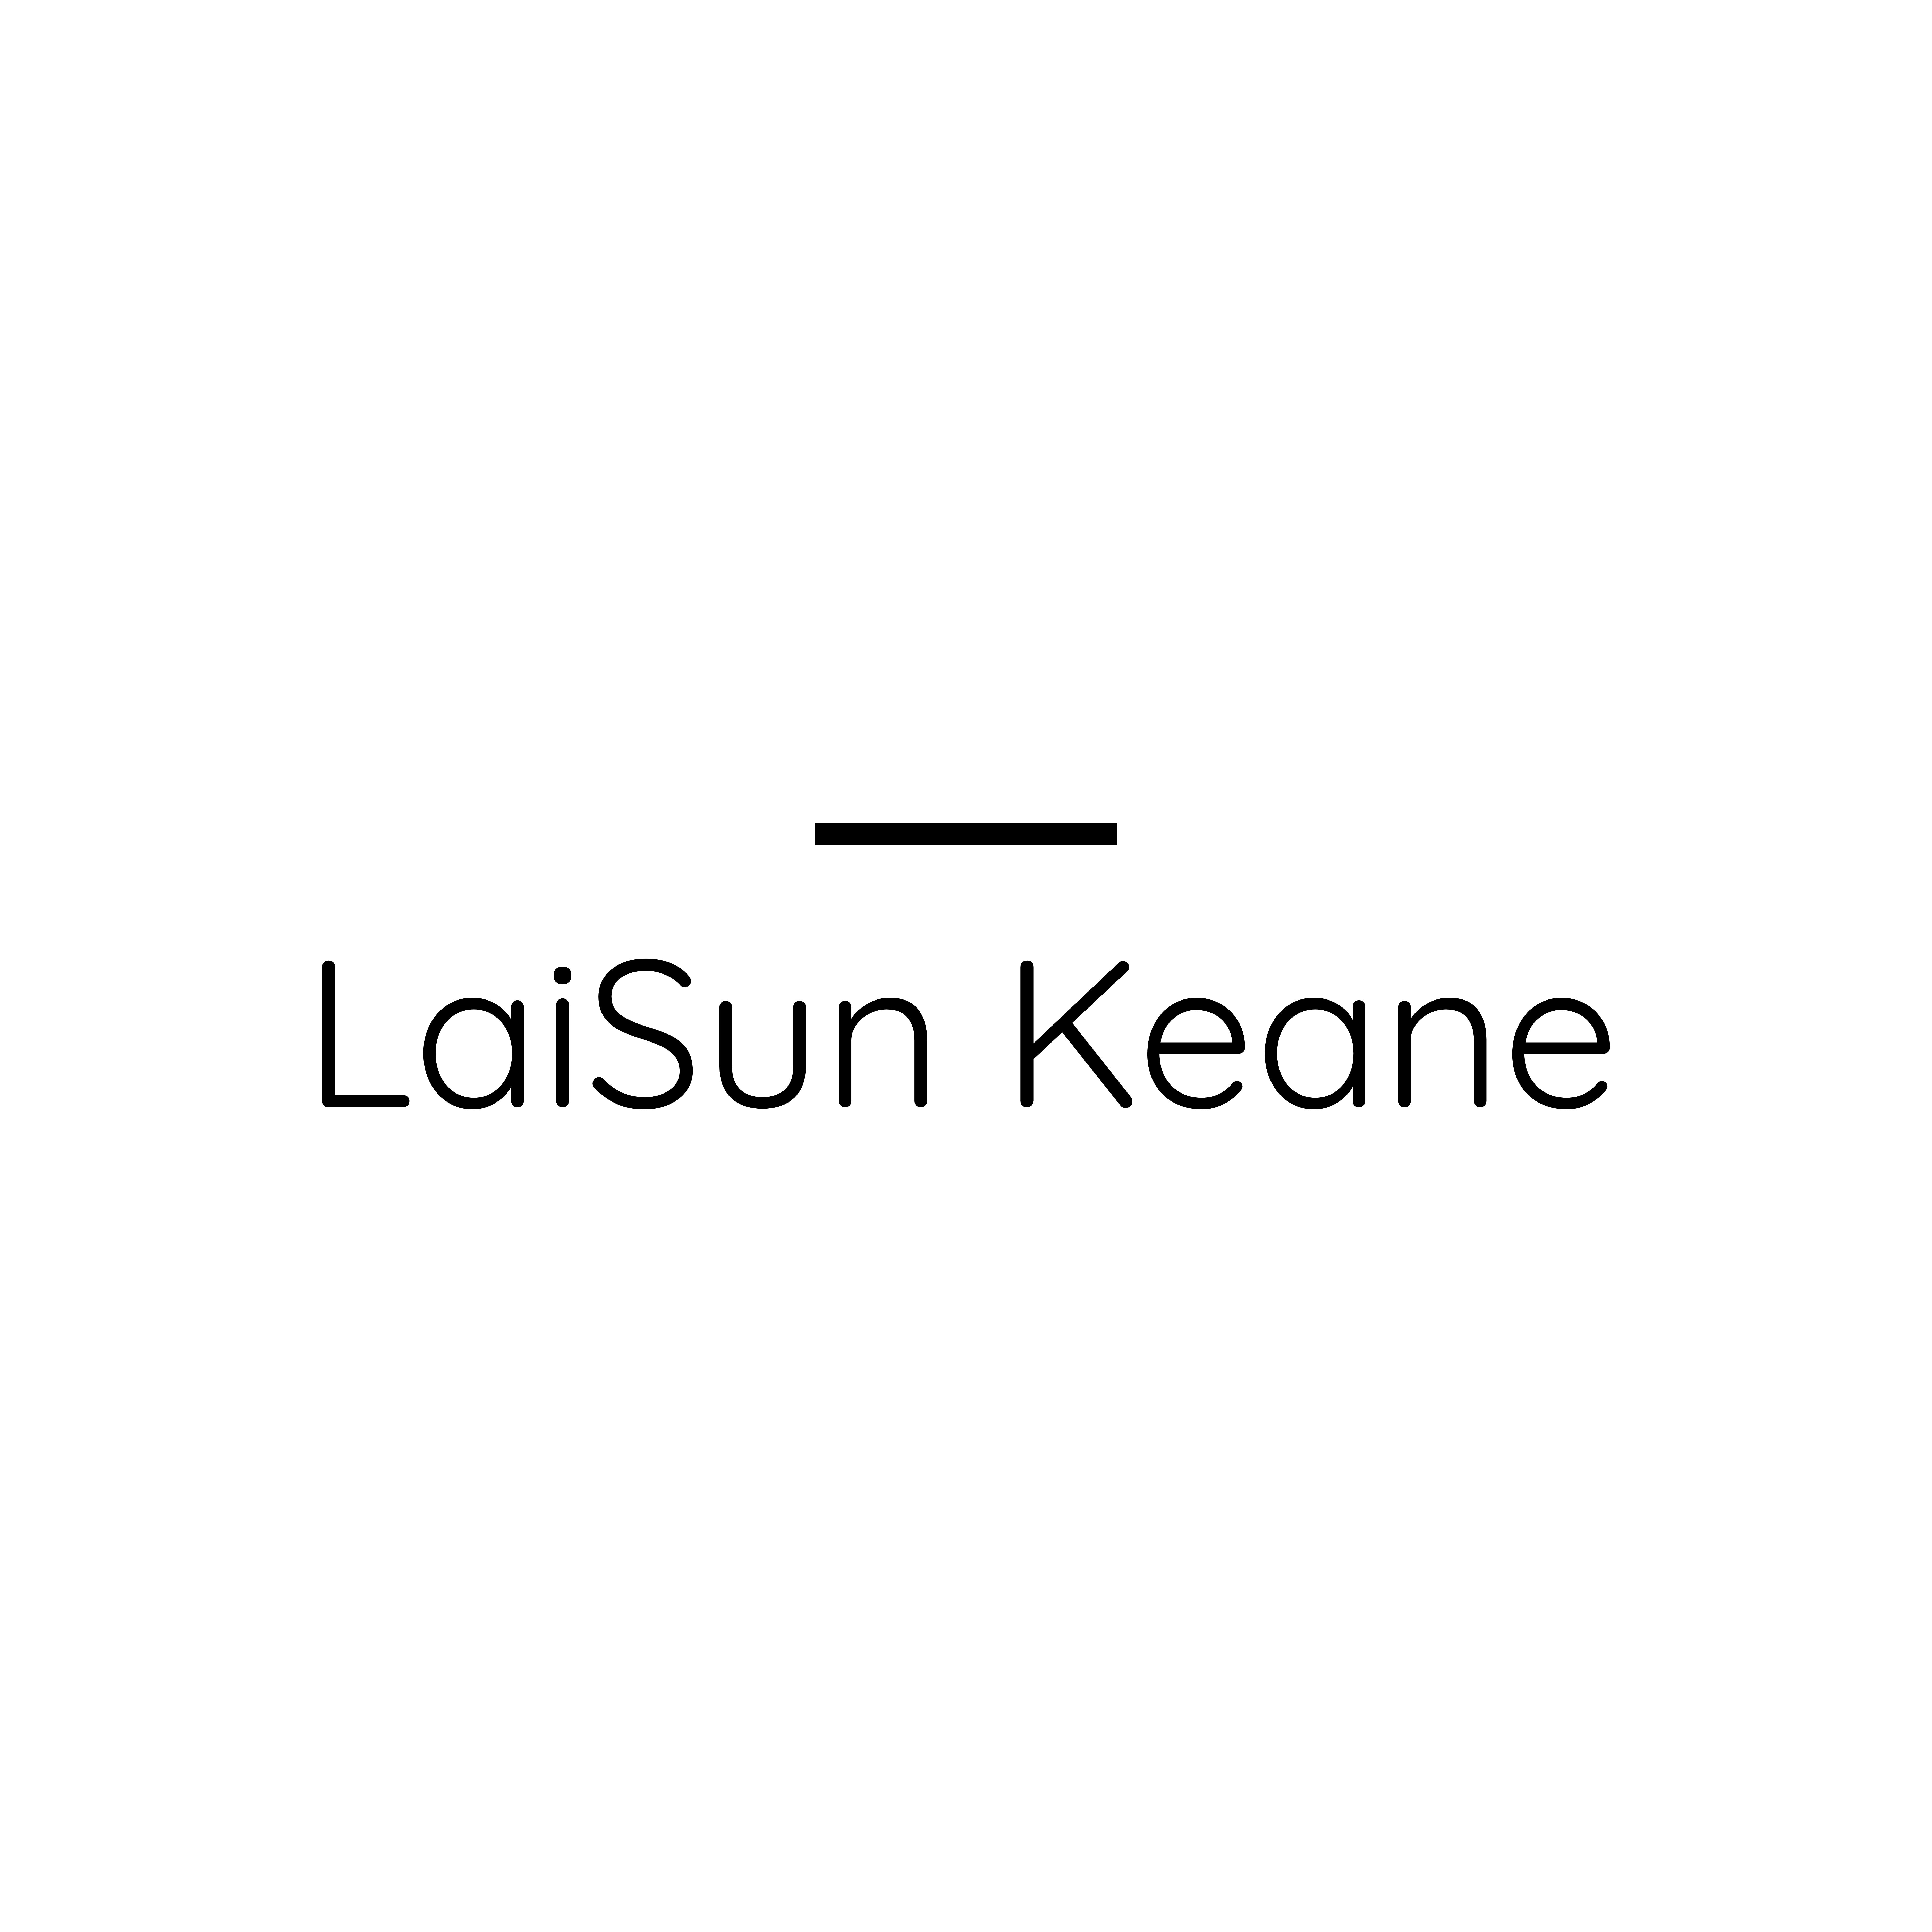 LaiSun Keane company logo